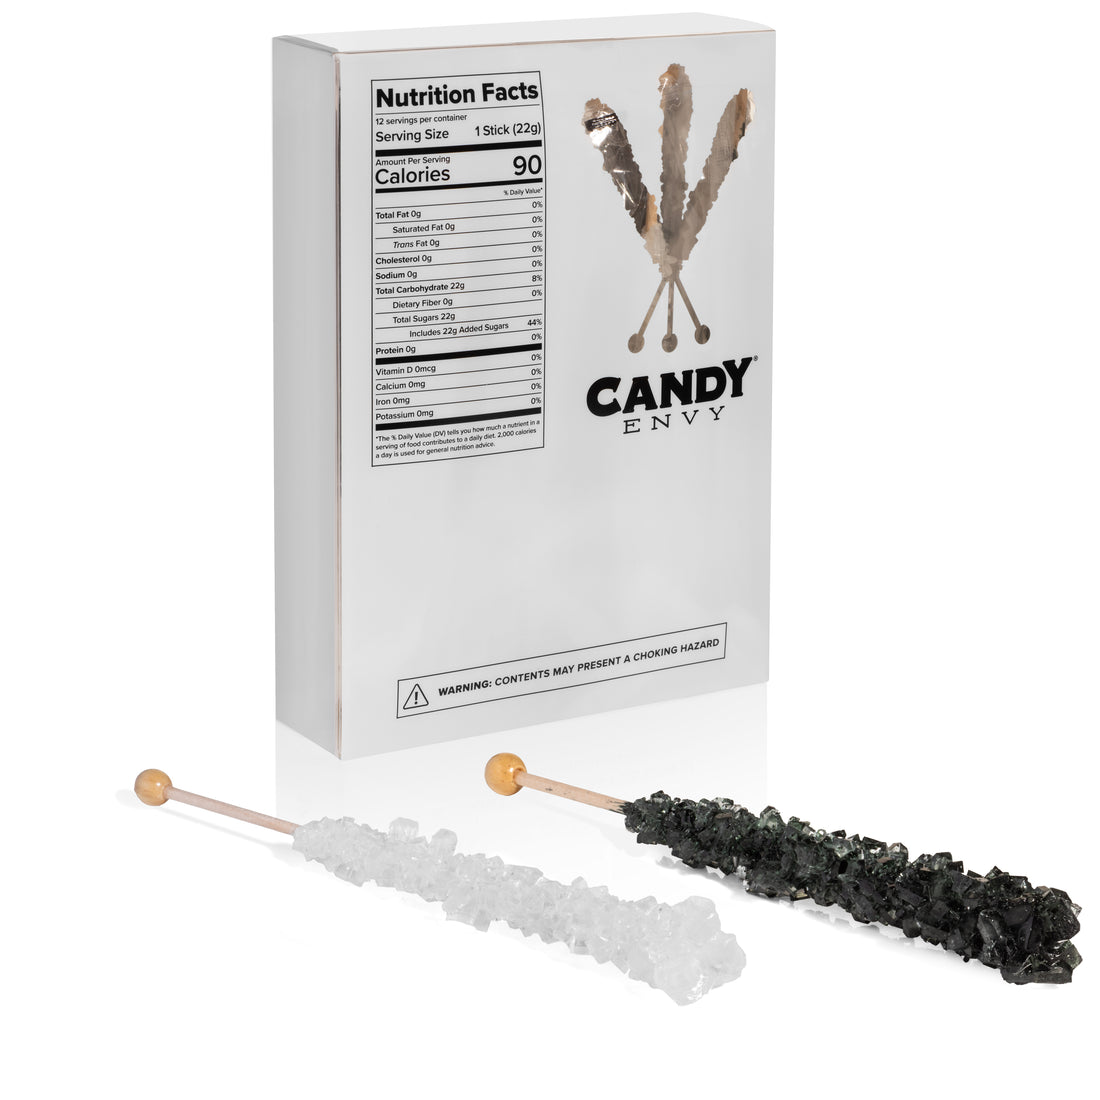 Black & White Rock Candy Sugar Sticks - Black Cherry and Original Sugar Flavors